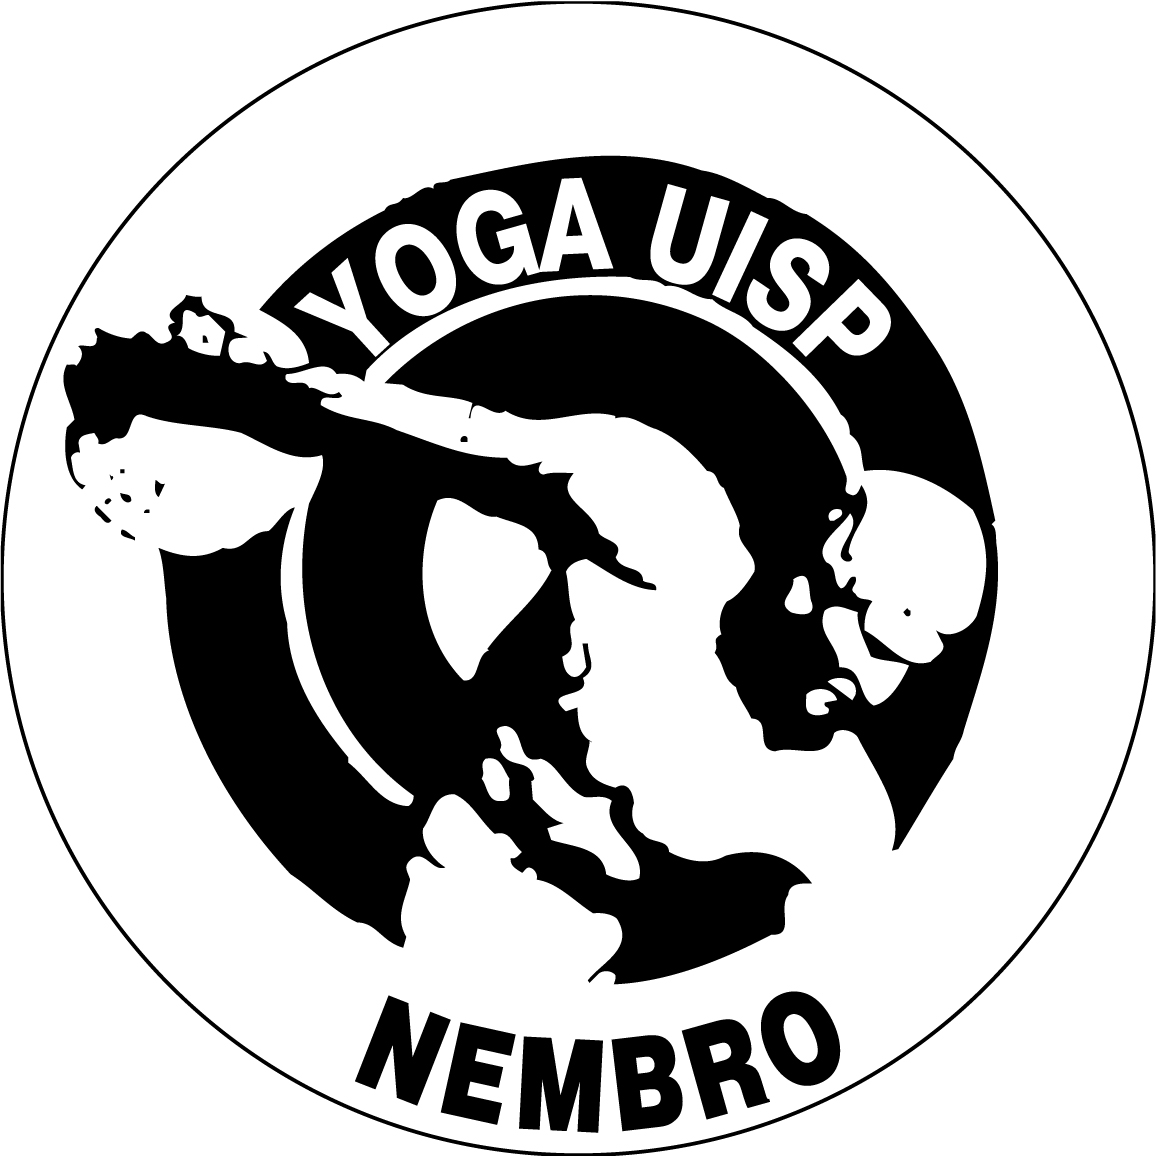 luogo A.S.D. Yoga UISP Nembro 